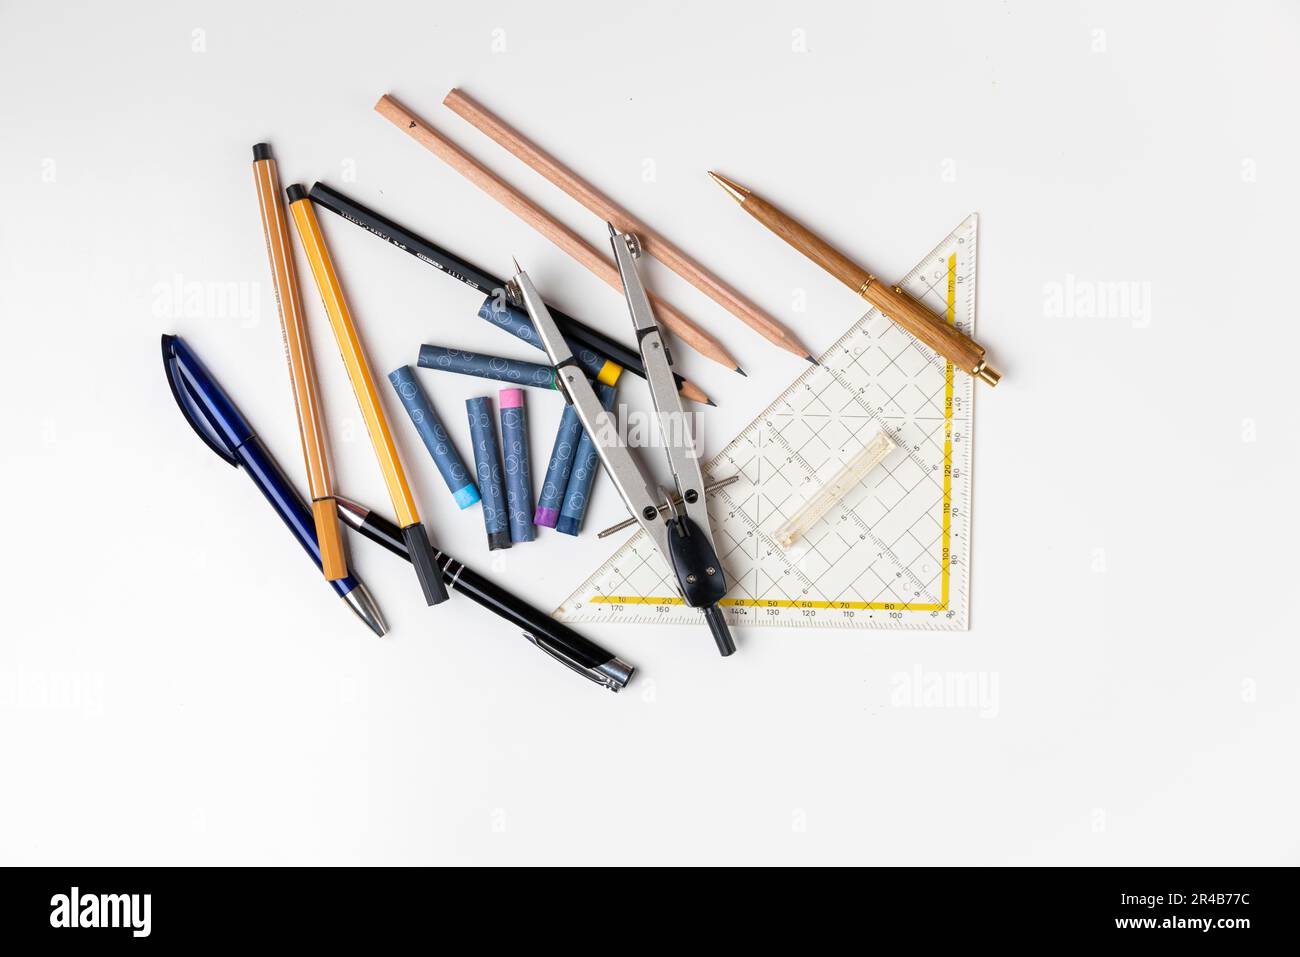 https://c8.alamy.com/comp/2R4B77C/writing-and-drawing-utensils-school-supplies-white-background-2R4B77C.jpg